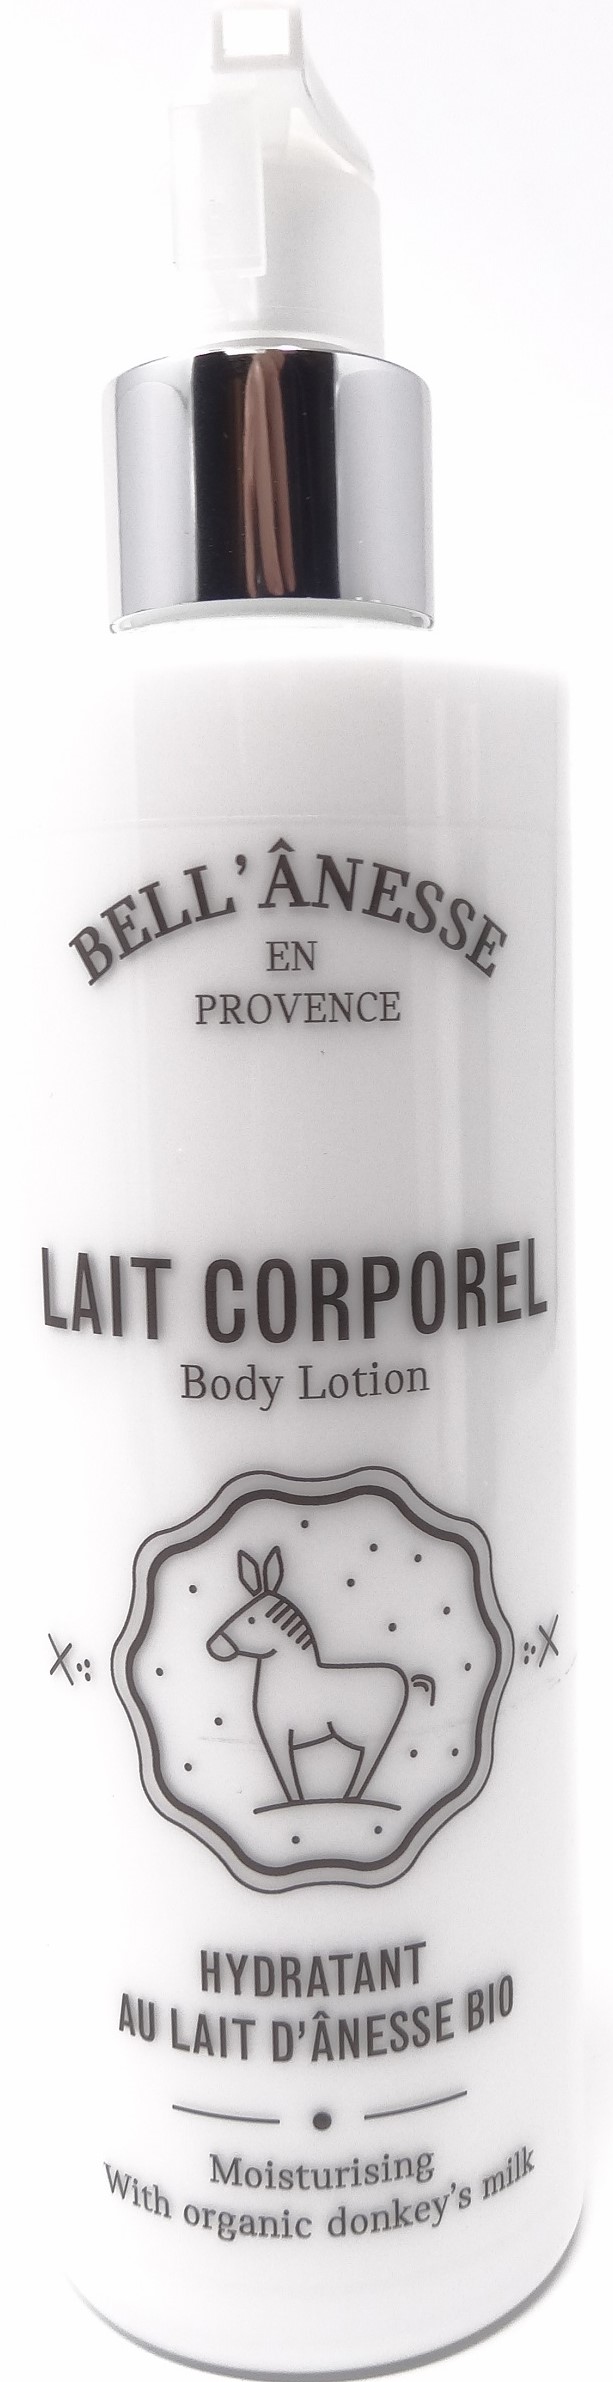 Body lotion(with argan oil & donkey milk)